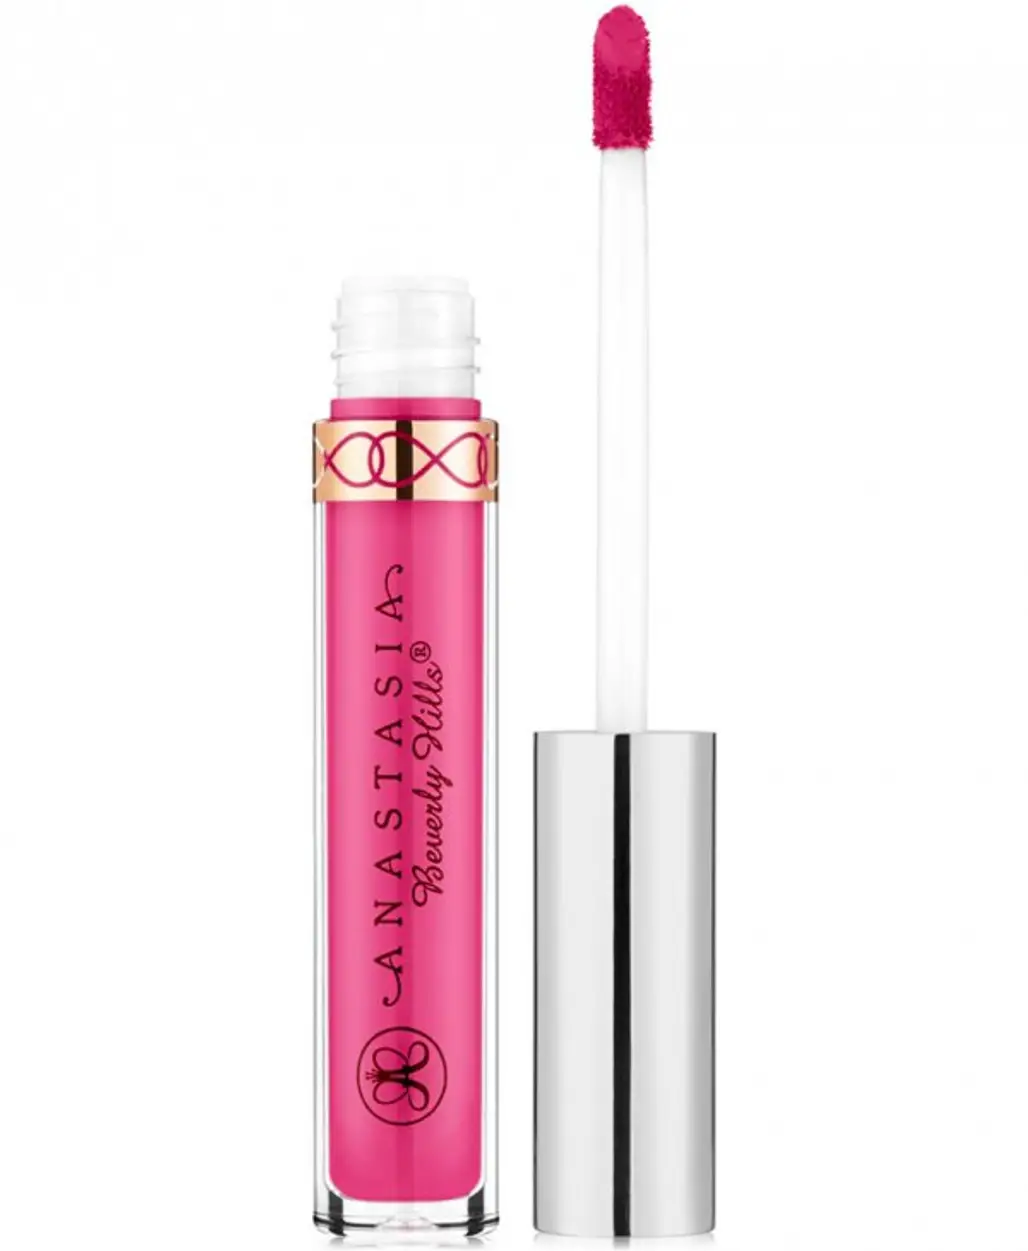 Anastasia Beverly Hills Liquid Lipstick in Party Pink